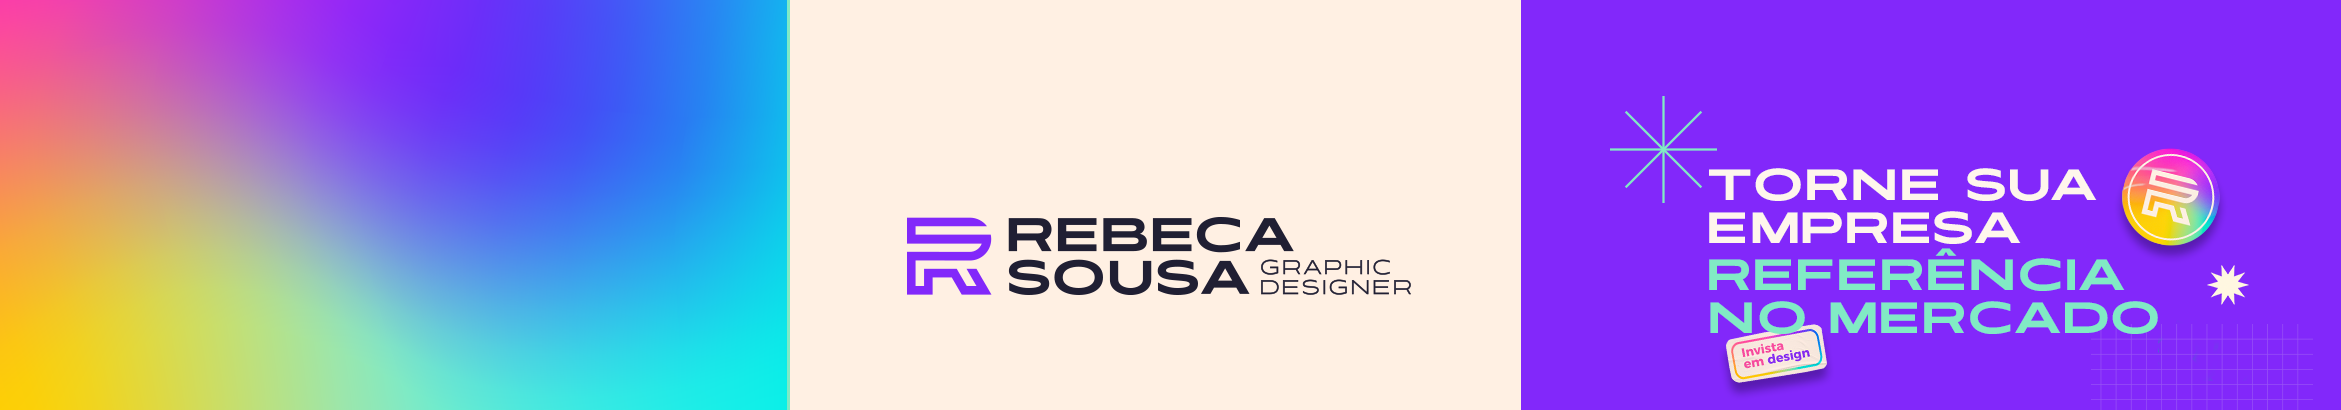 Rebeca Sousa's profile banner